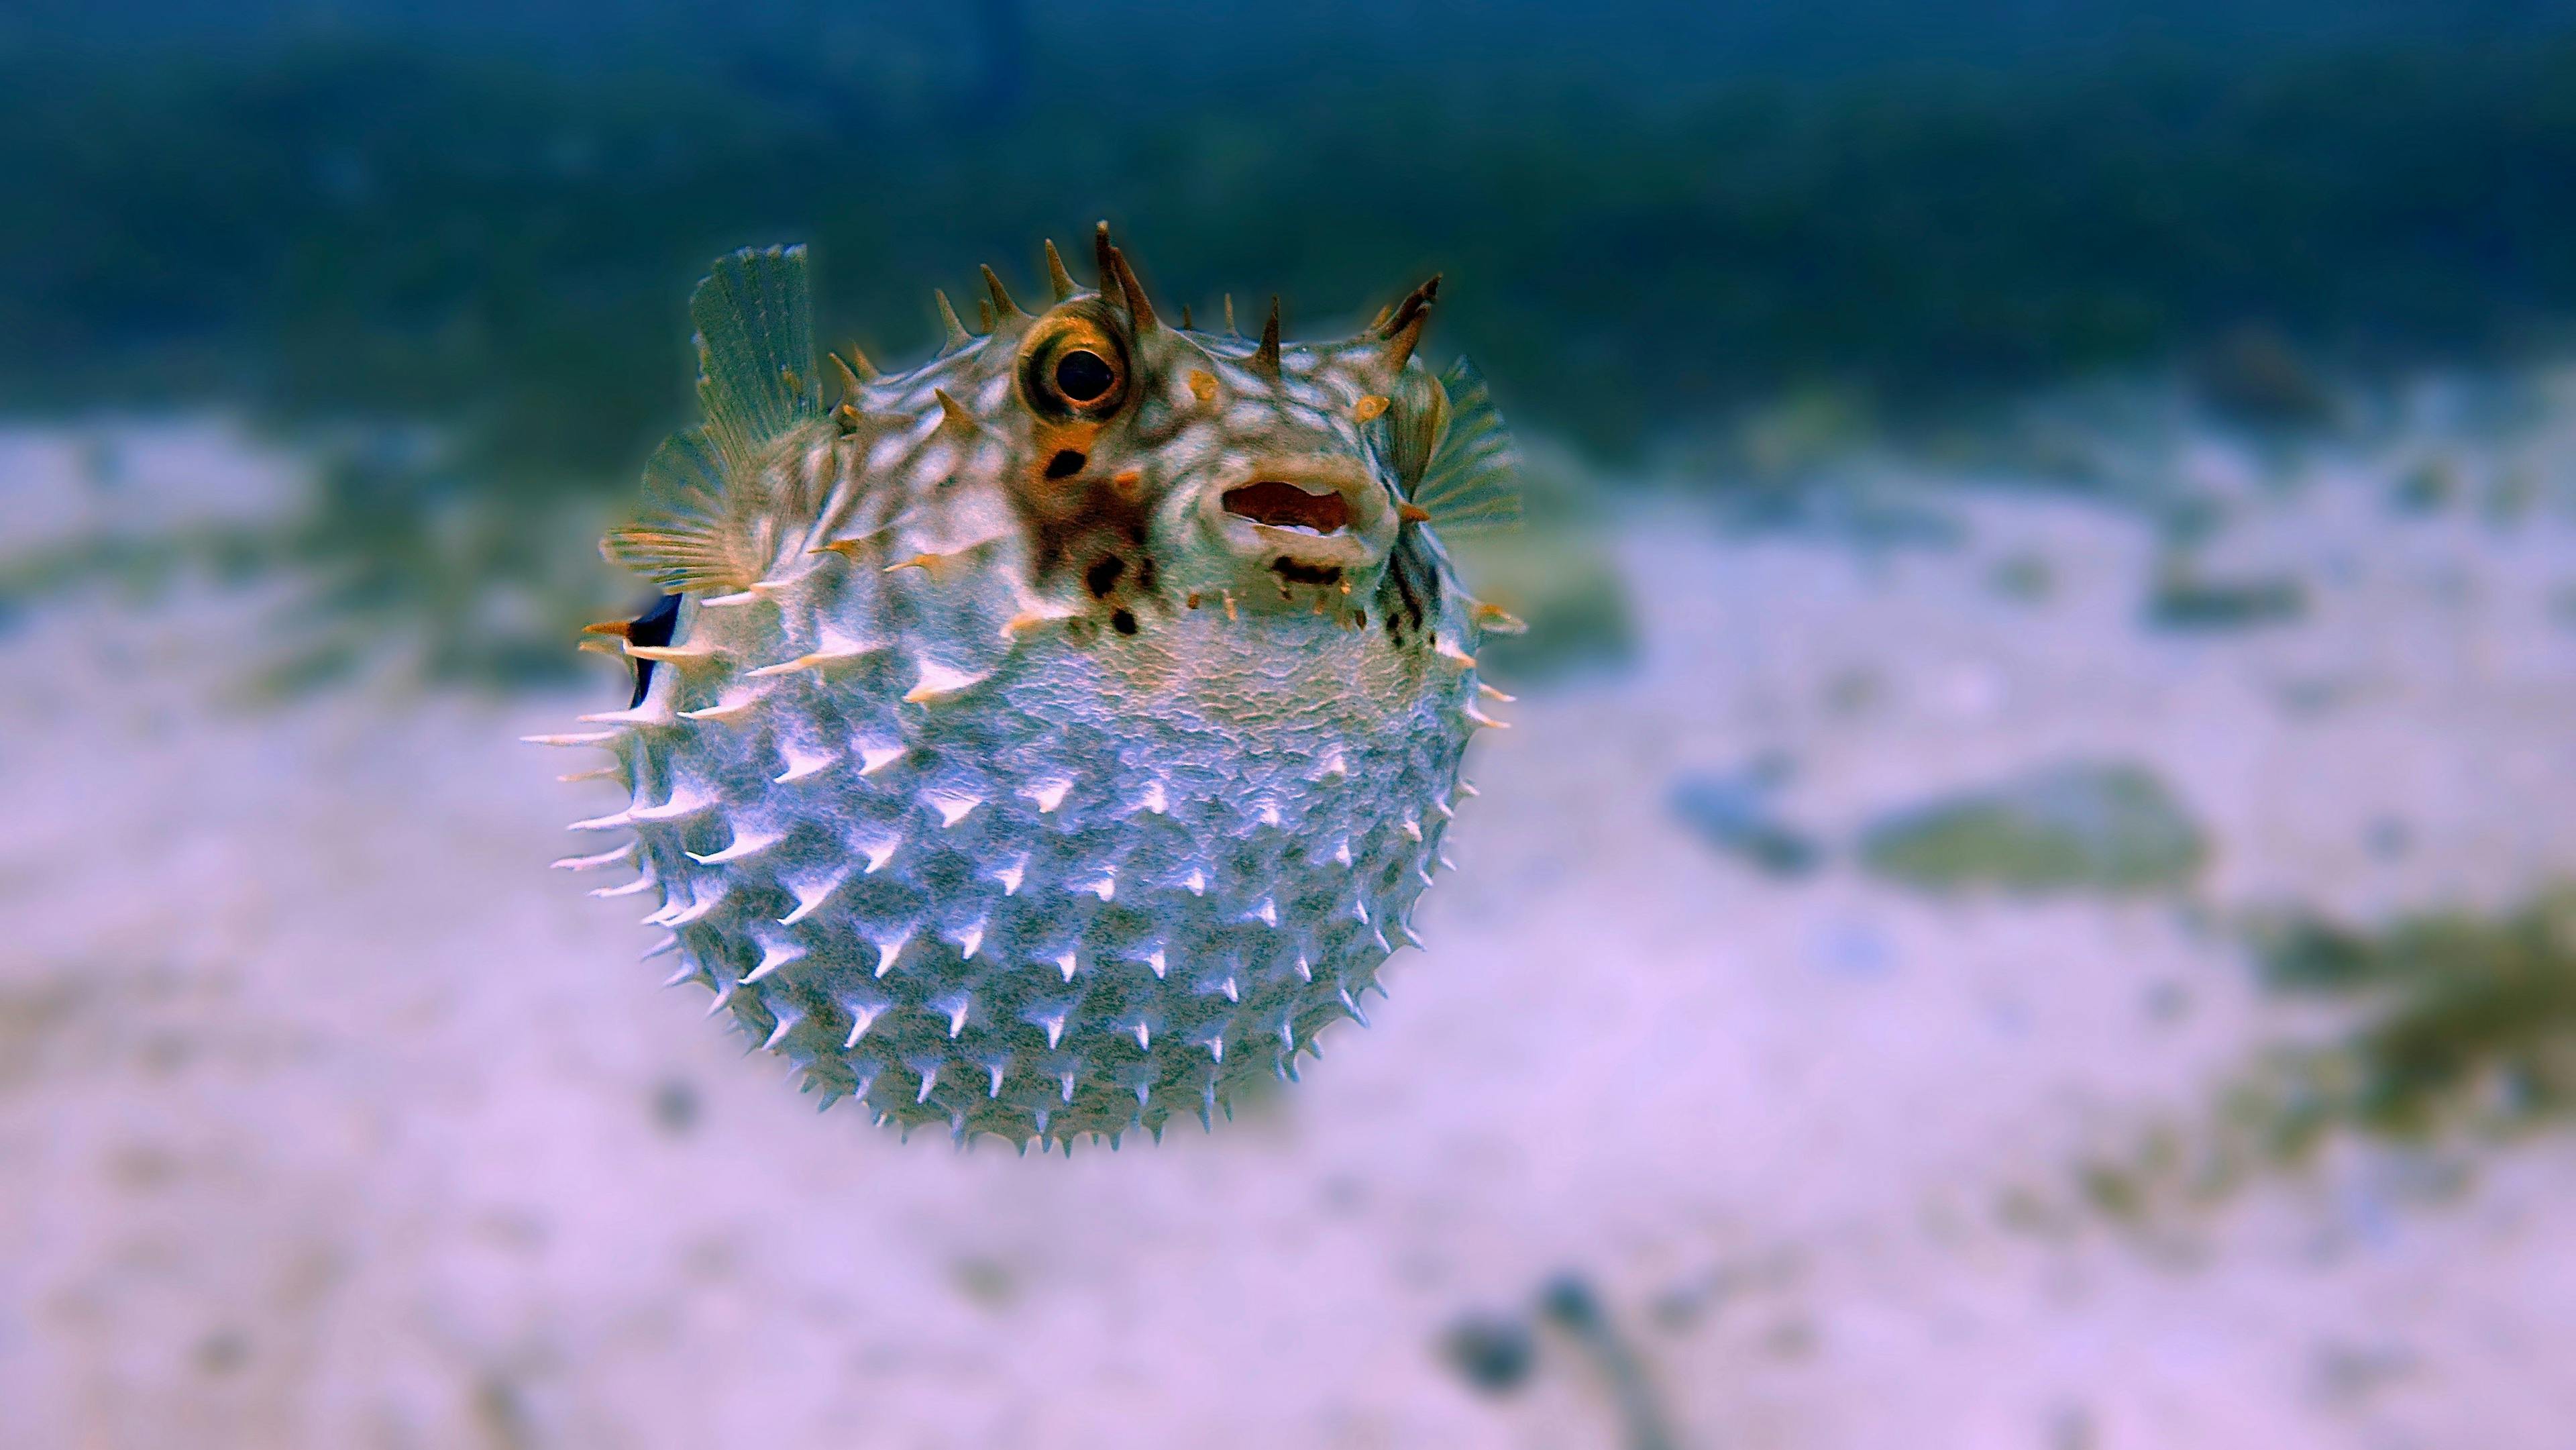 pez-globo-la-belleza-mortal-del-reino-acuatico